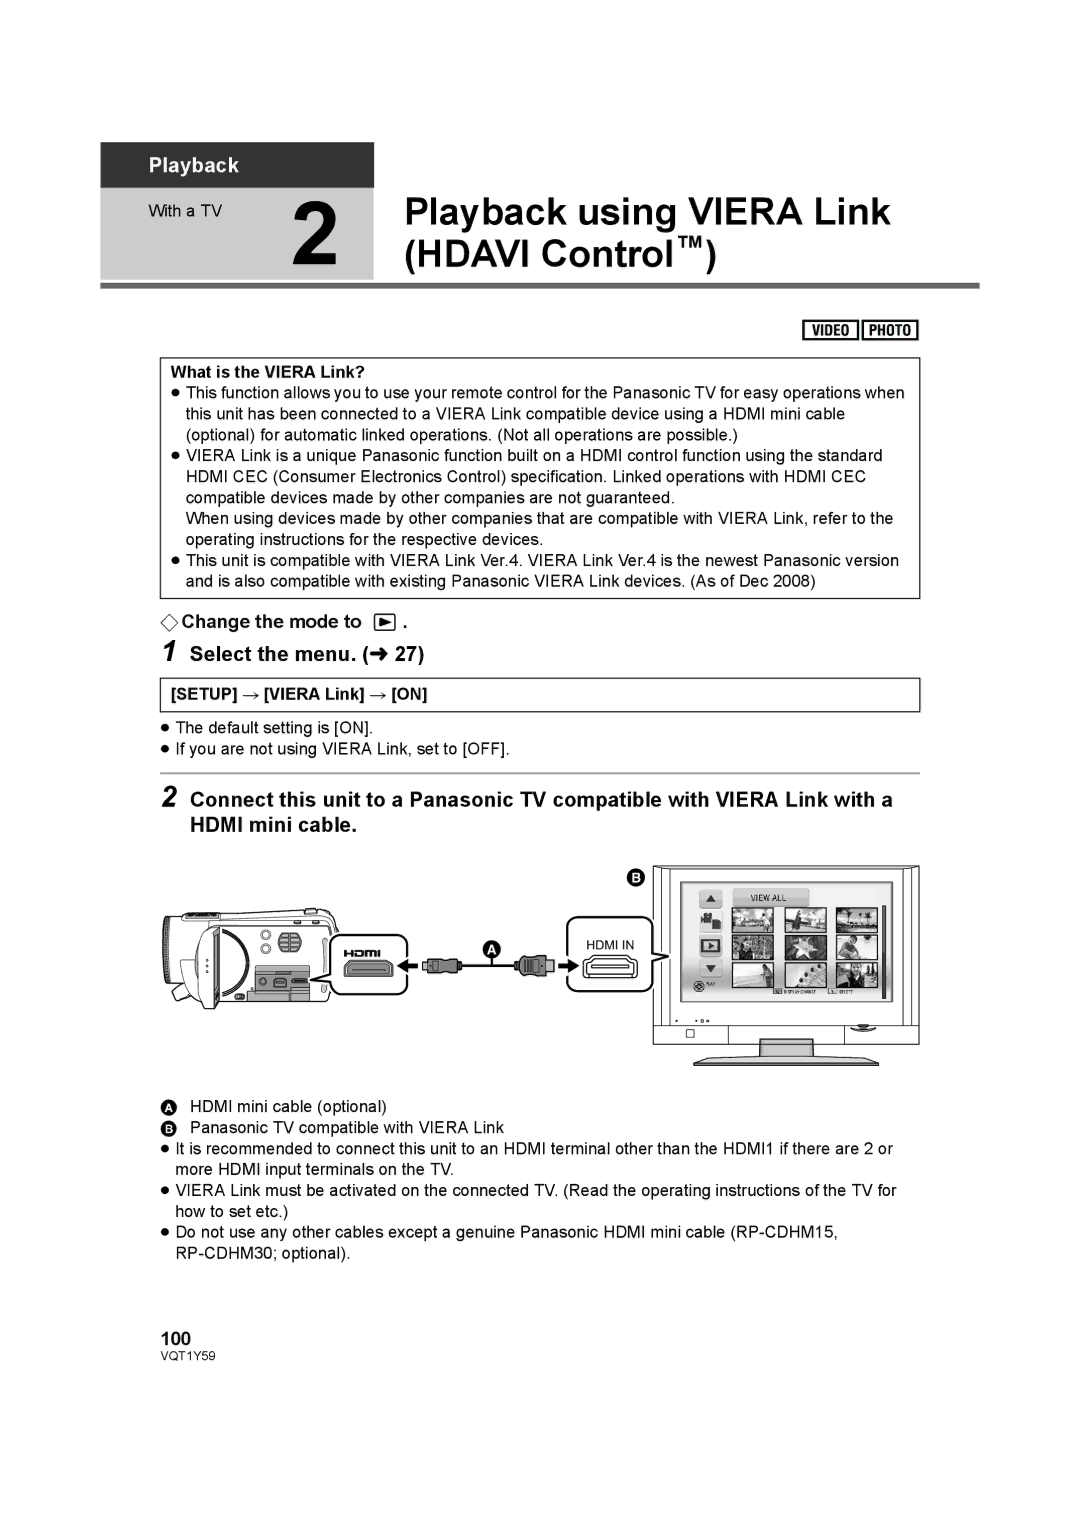 Panasonic HDC-TM200 Playback using Viera Link, Hdavi Control, 100, What is the Viera Link?, Setup # Viera Link # on 